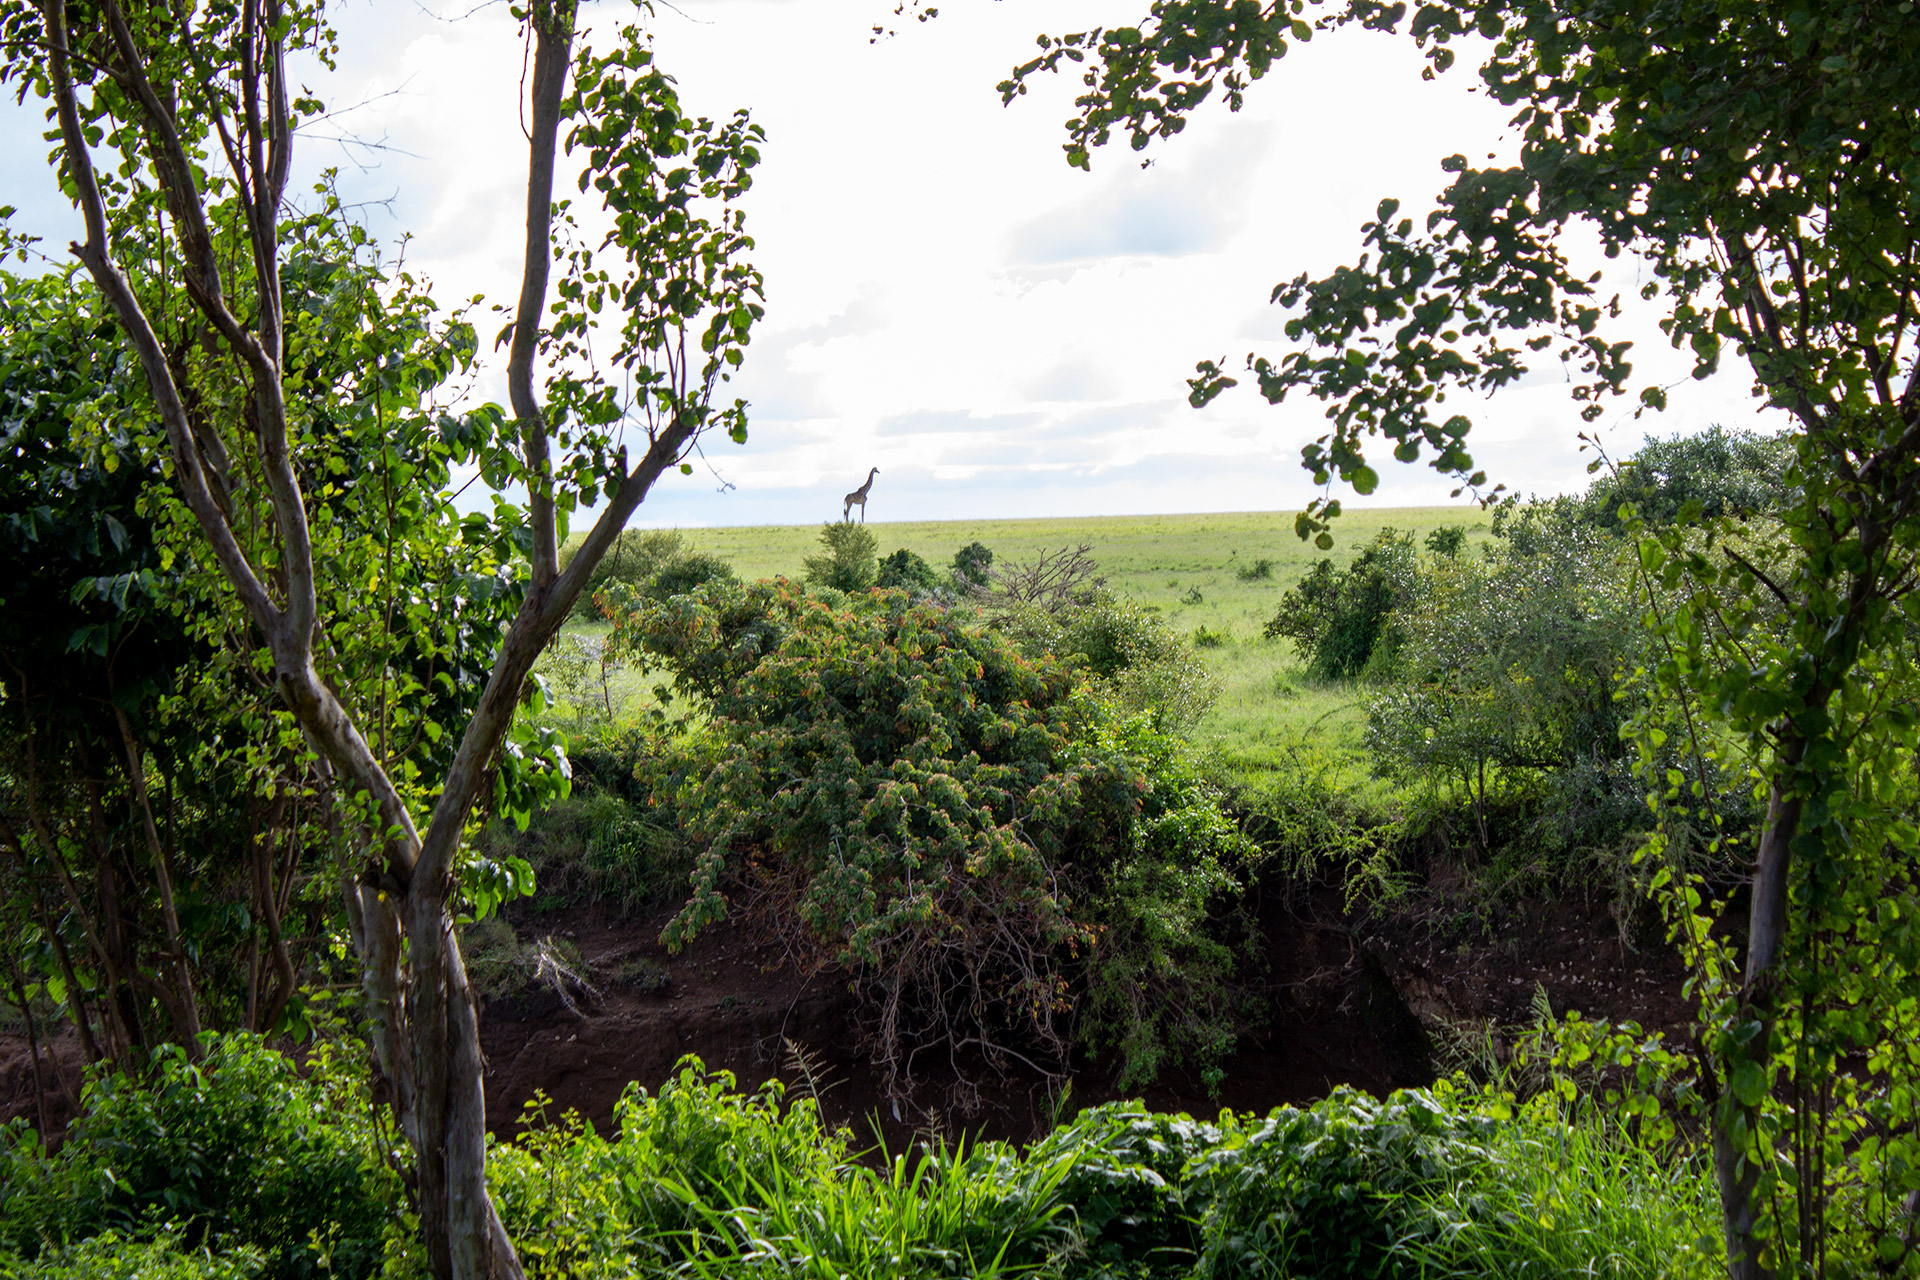 View of the Maasai Mara and a Giraffe across the River Talek